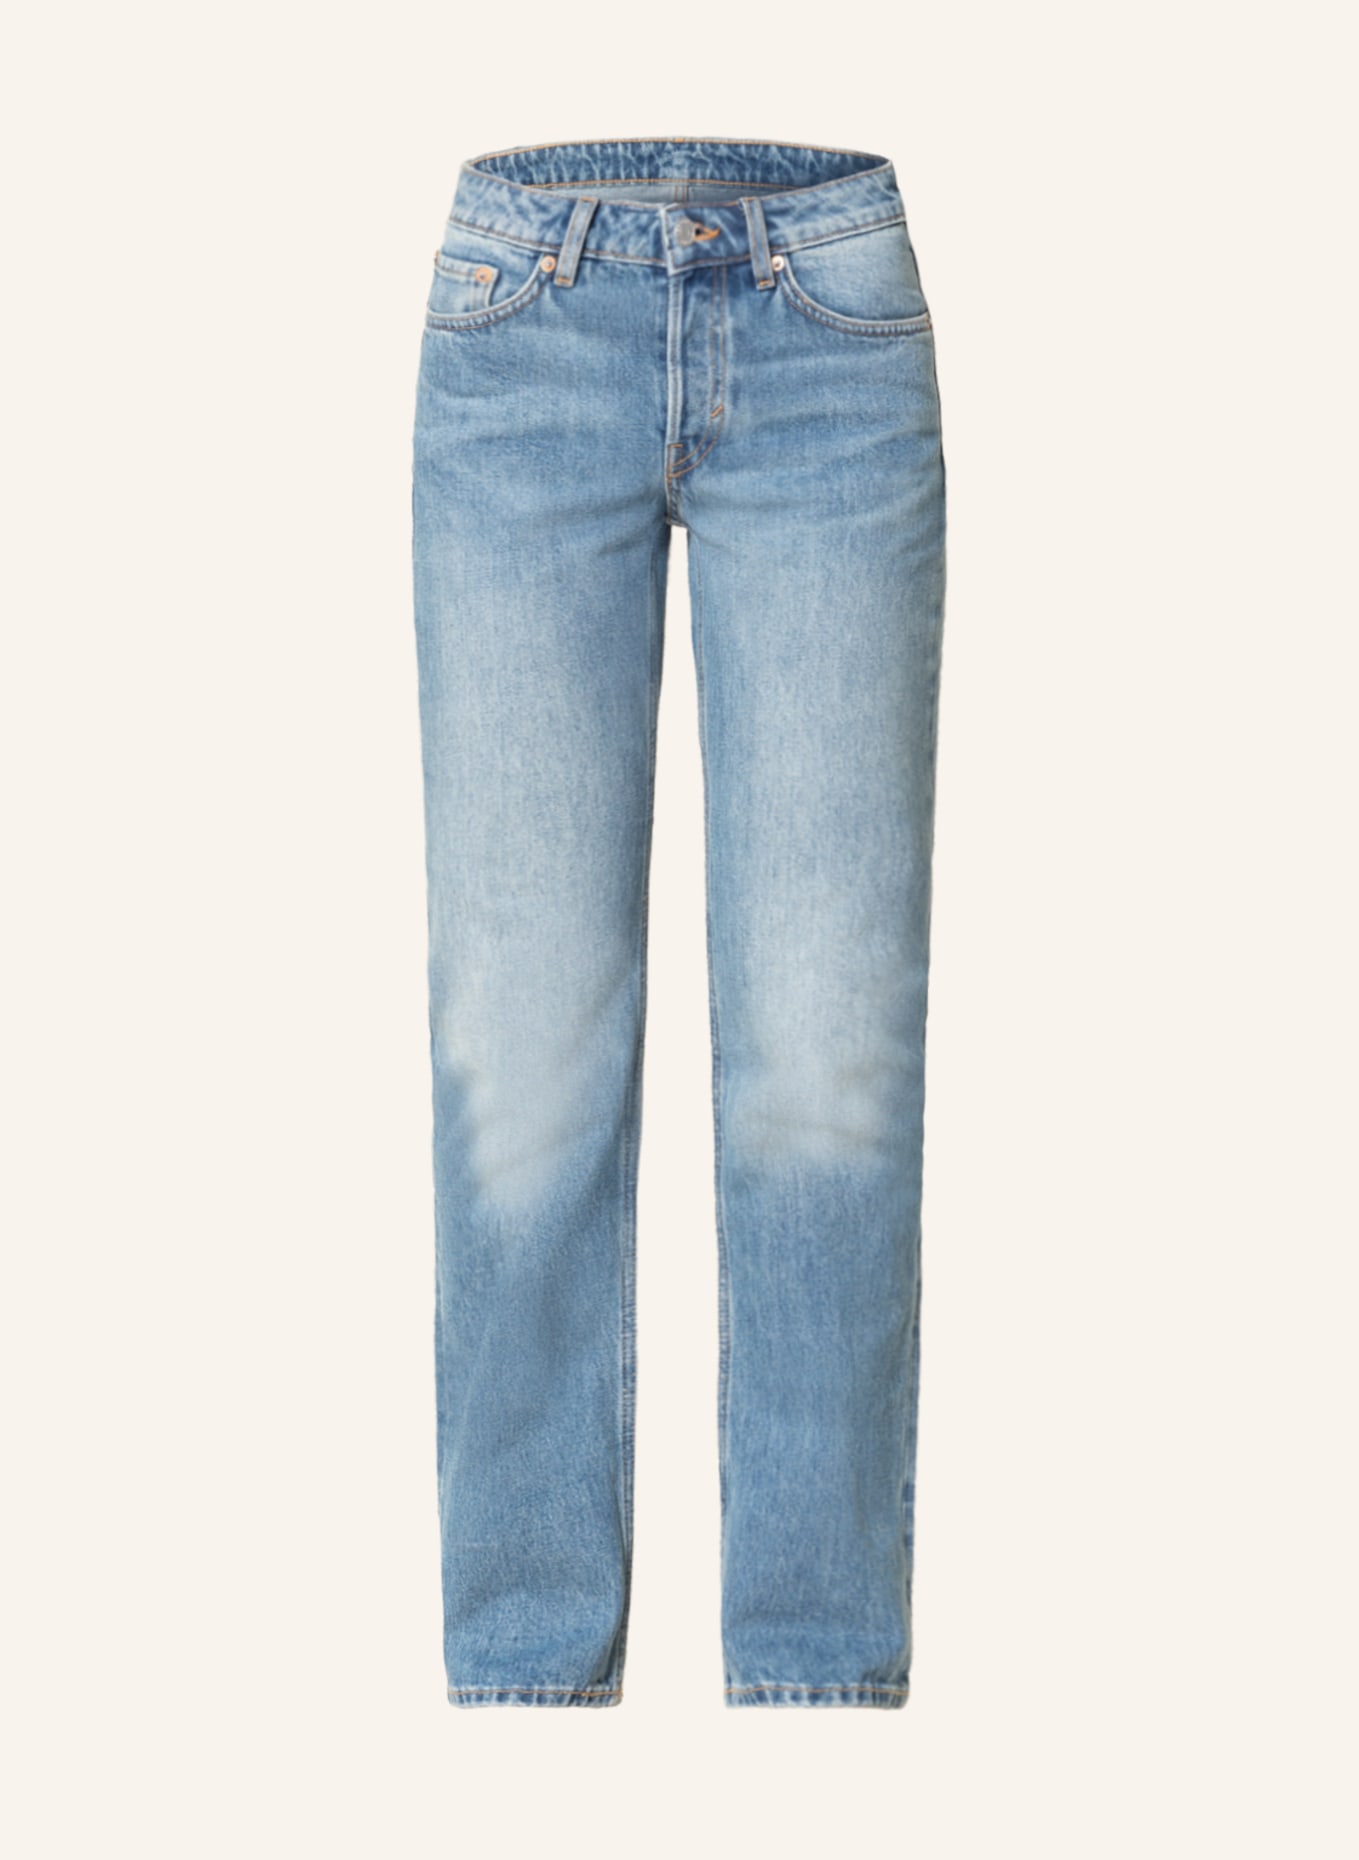 WEEKDAY Straight Jeans, Farbe: Blue Medium dusty (Bild 1)